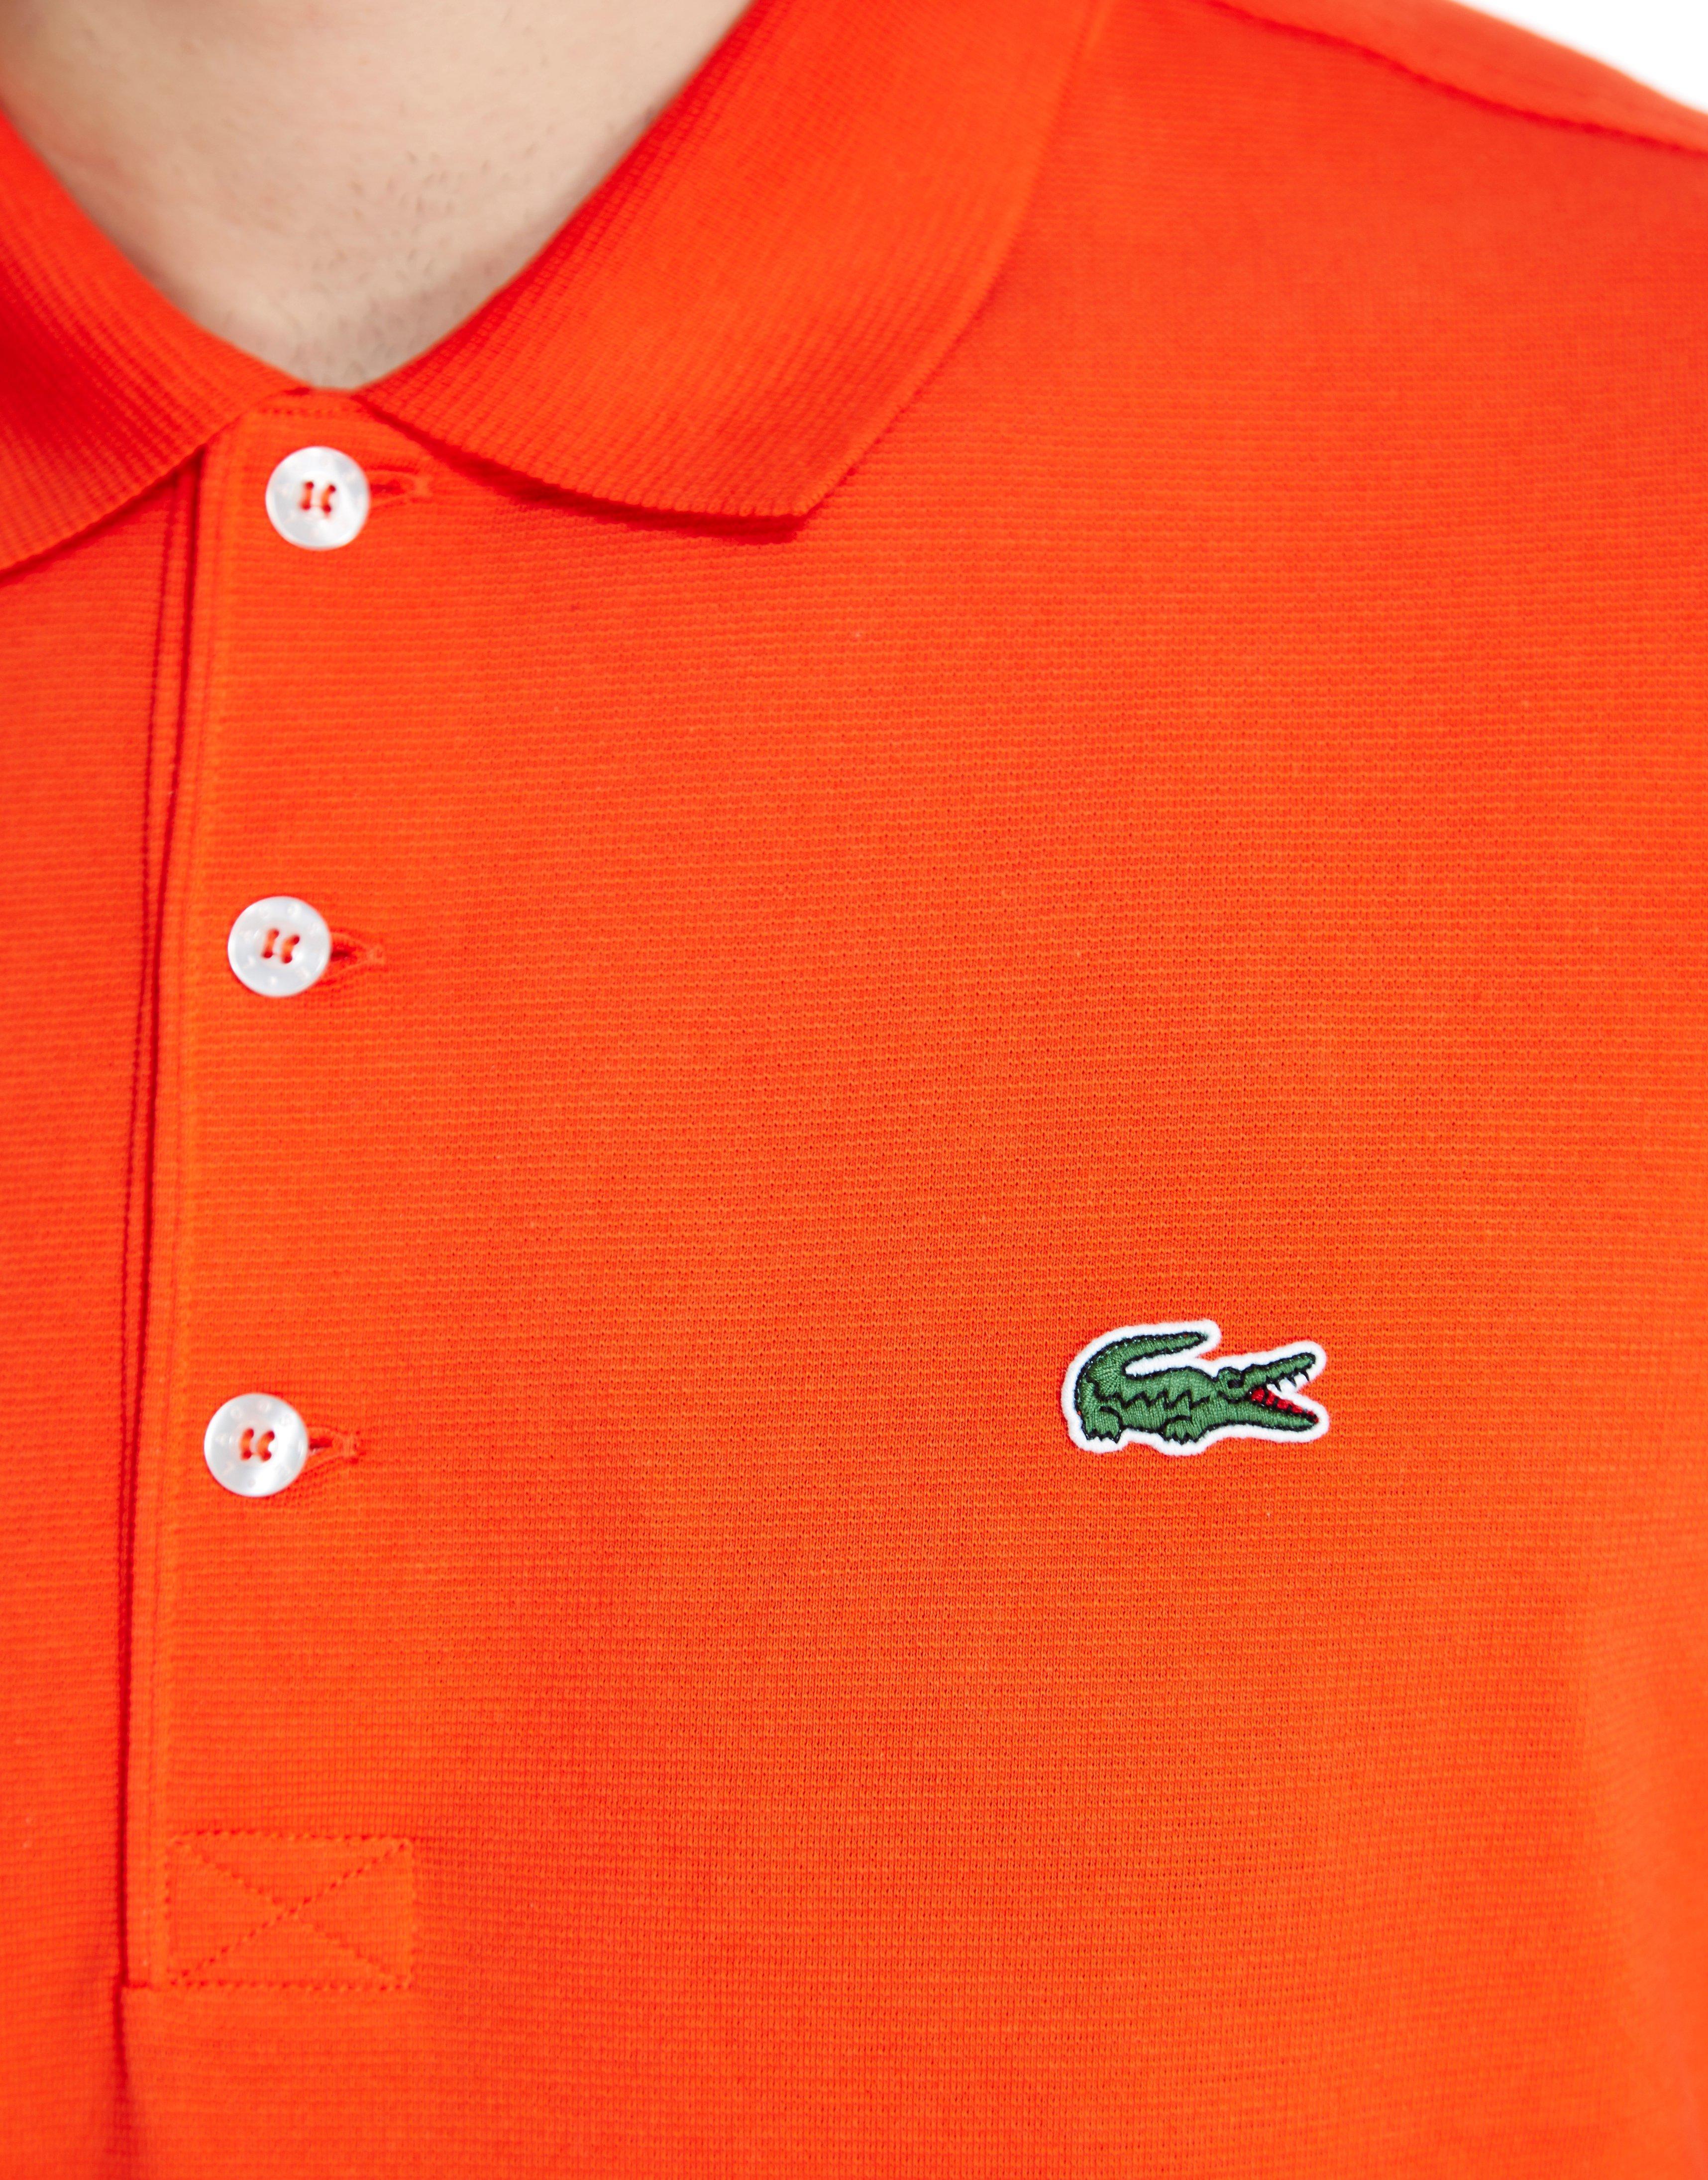 shirt with the alligator symbol